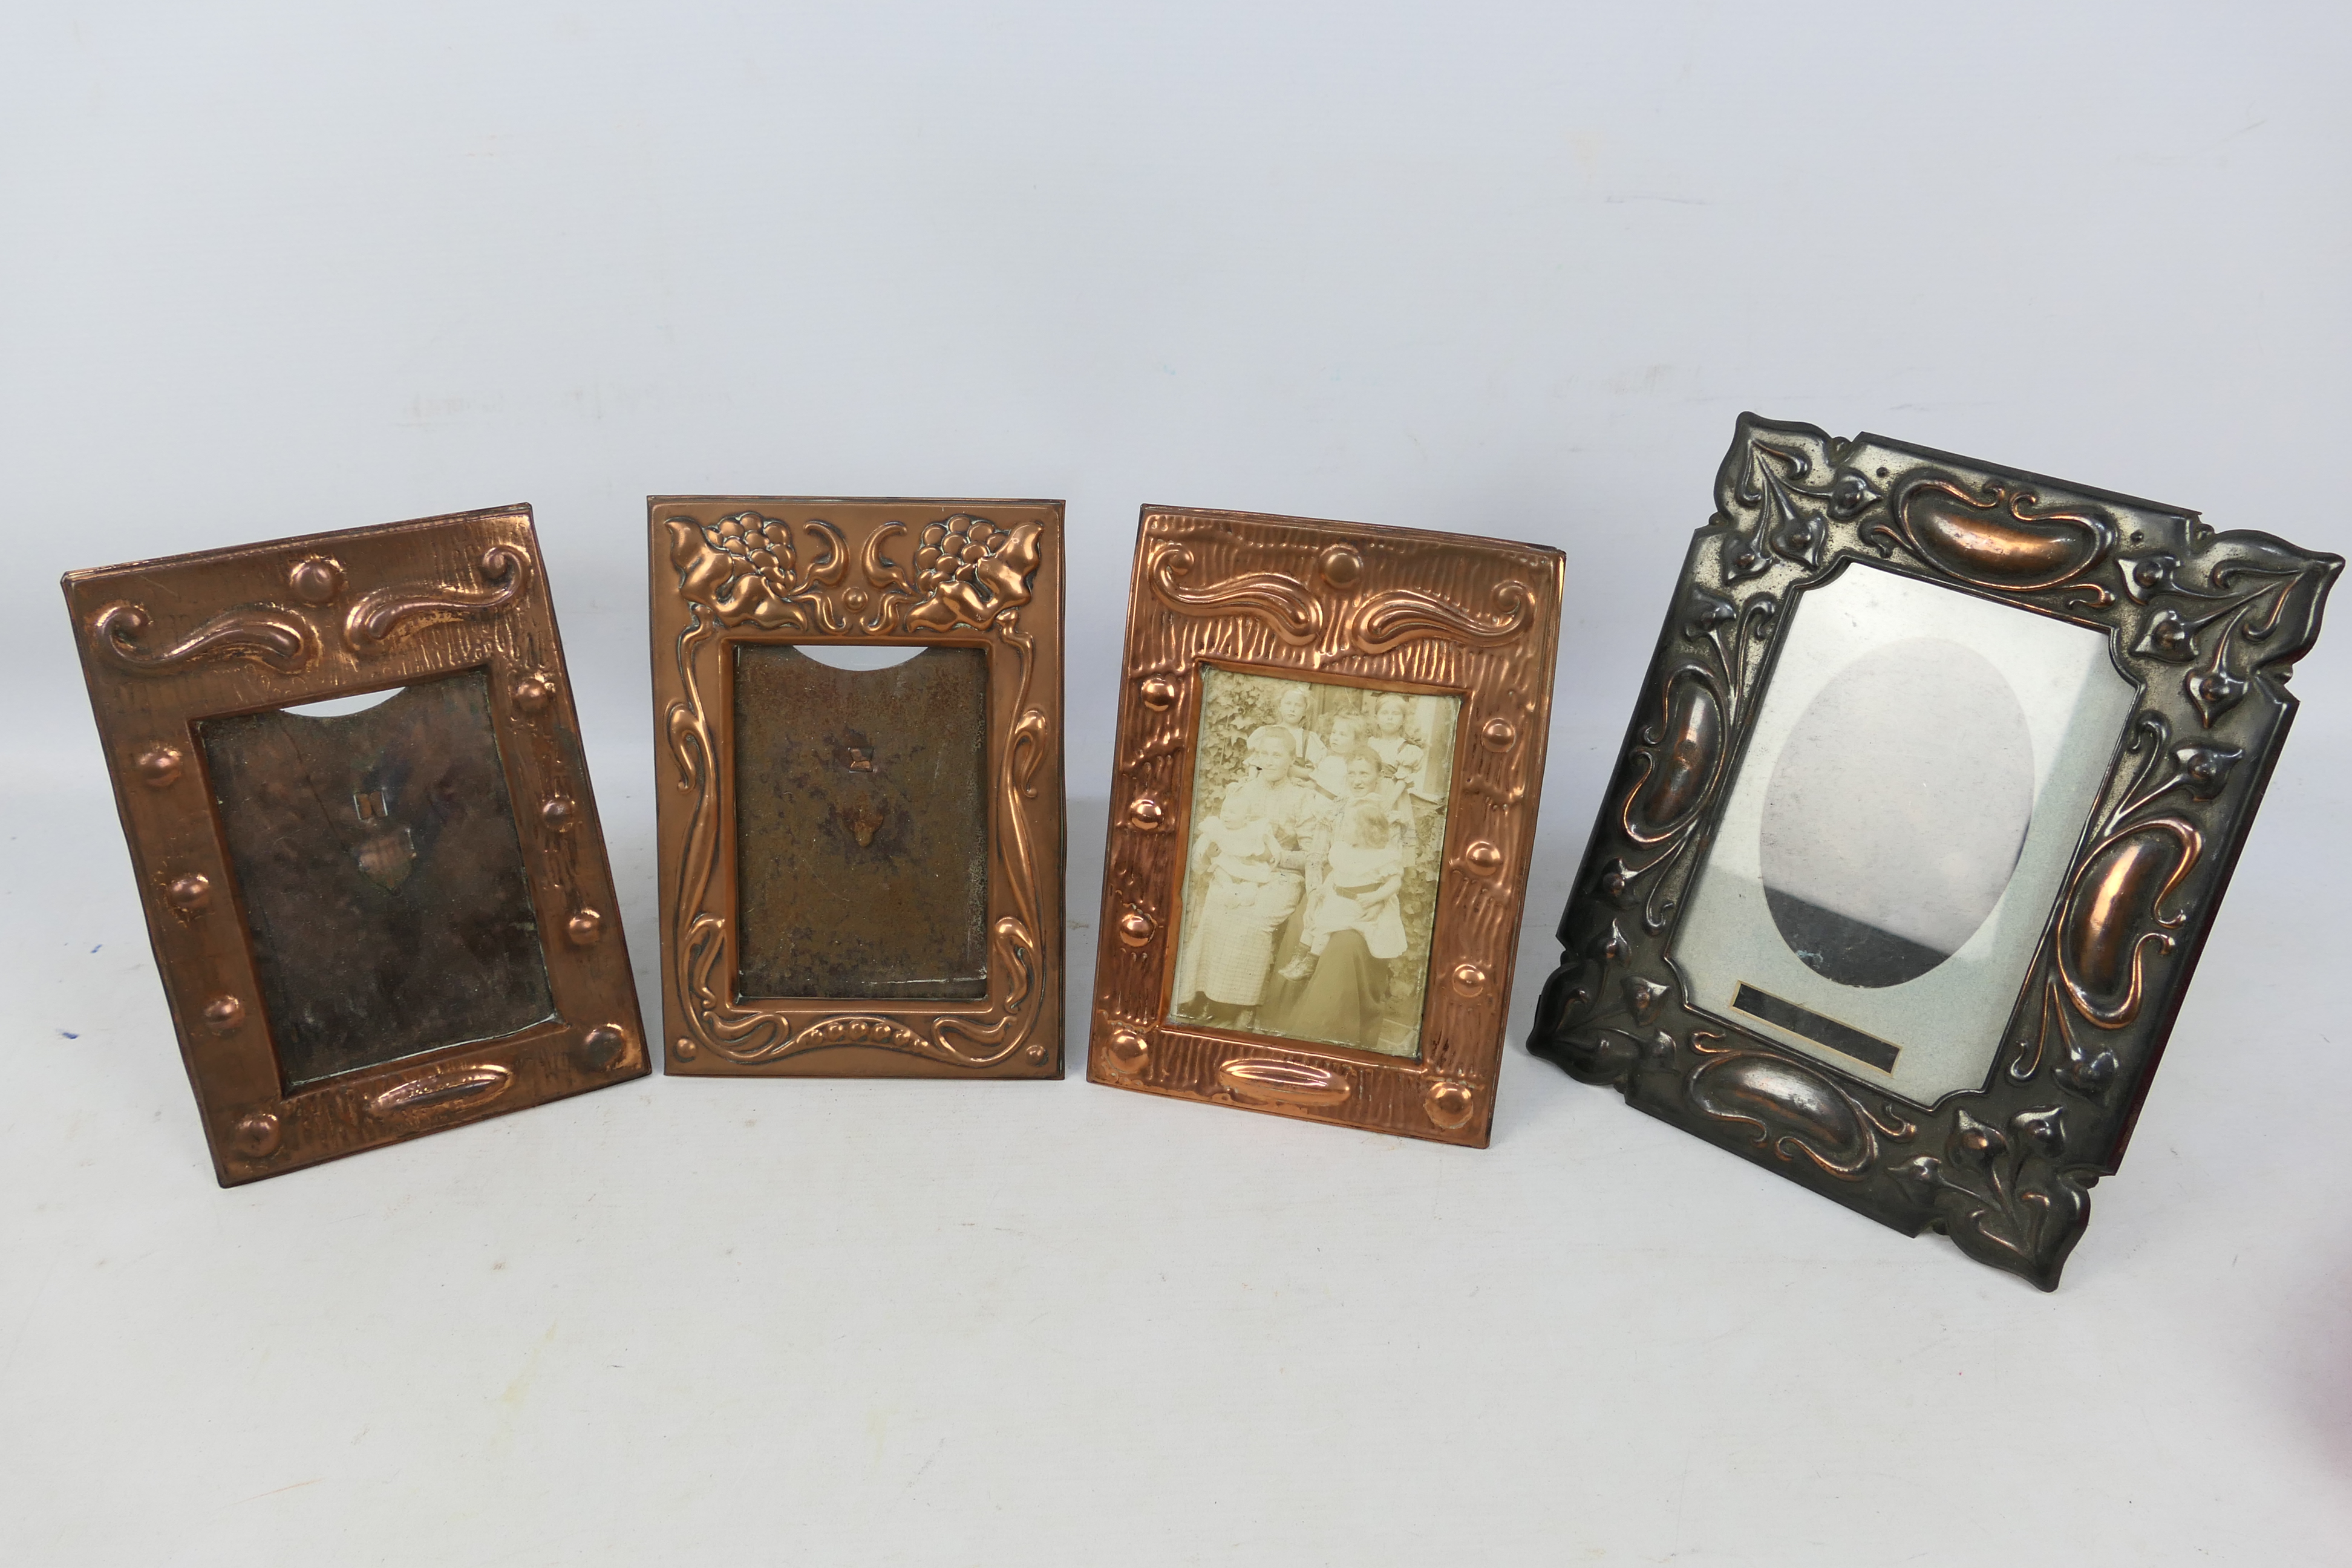 Four copper framed, easel back photograph frames including Art Nouveau style.